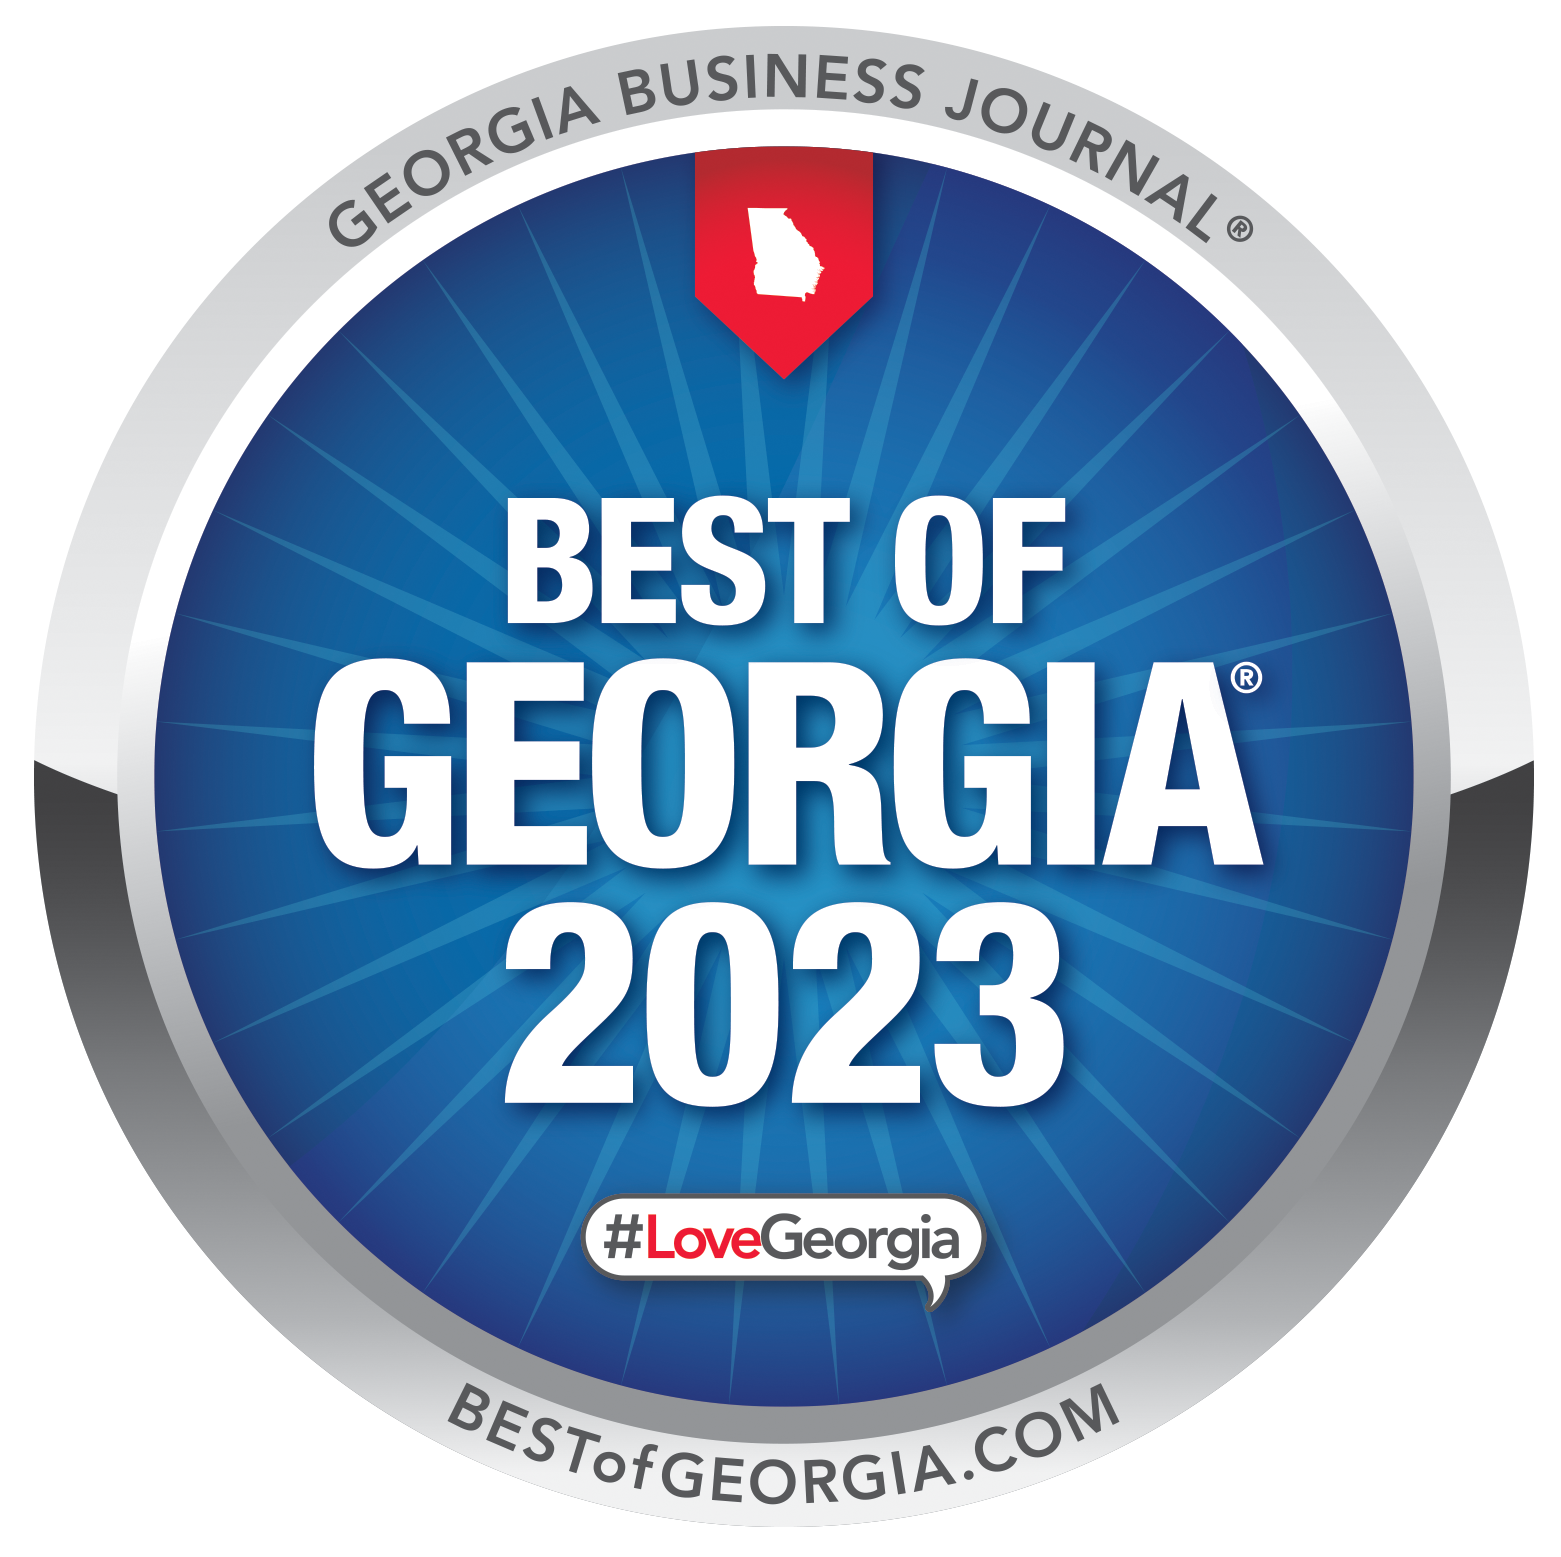 Georgia business journal best of georgia 2023 badge